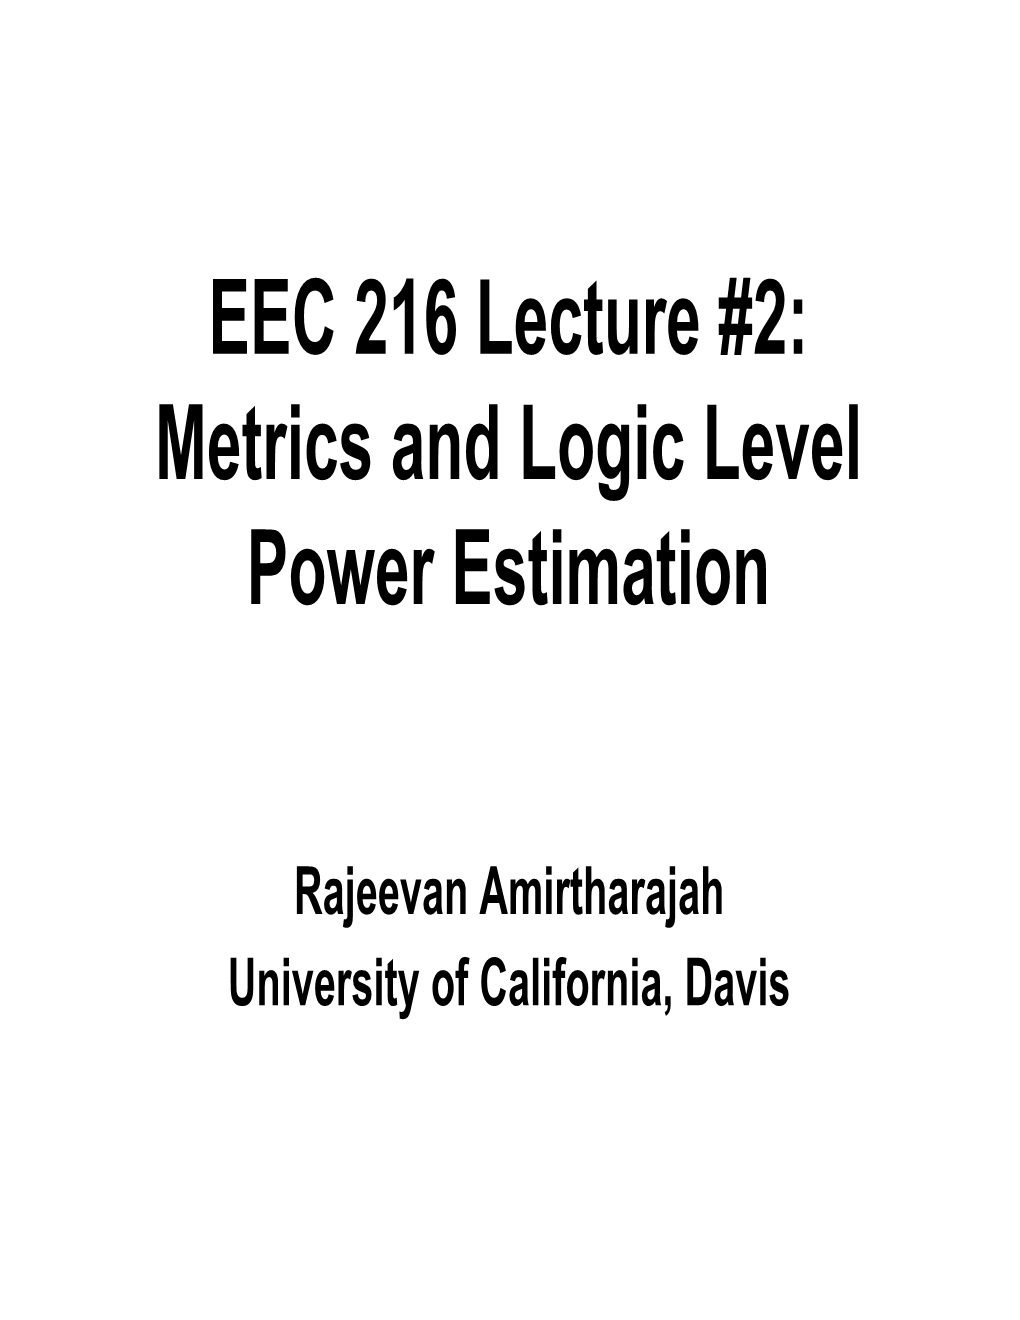 EEC 216 Lecture #2: Metrics and Logic Level Power Estimation